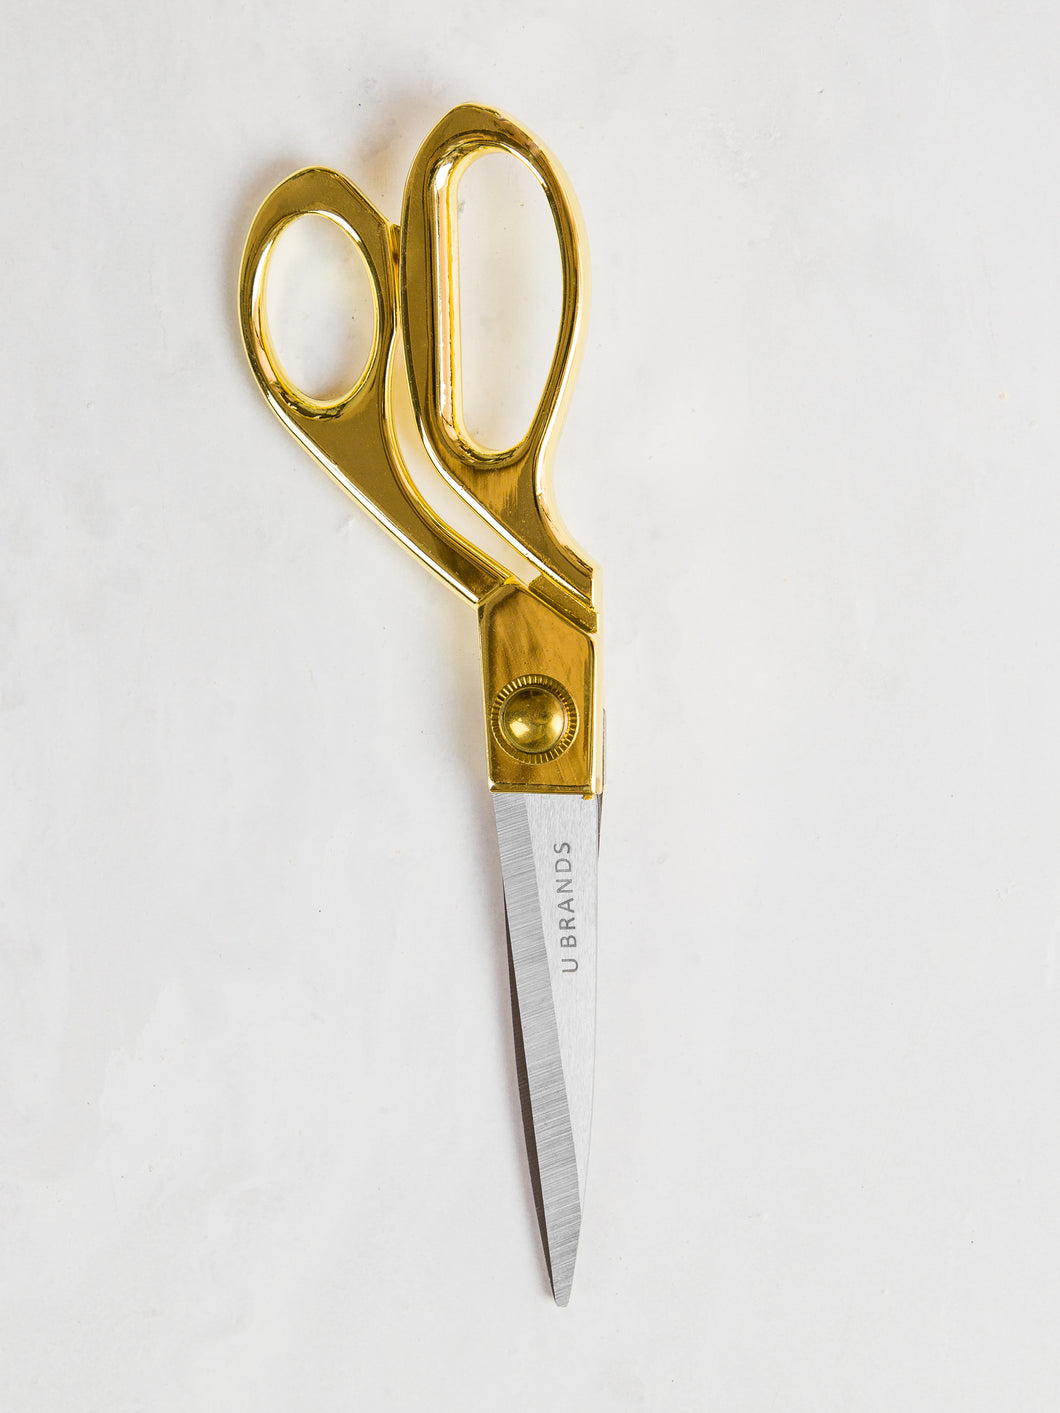 Golden Bird Scissors – Nest Style & Design